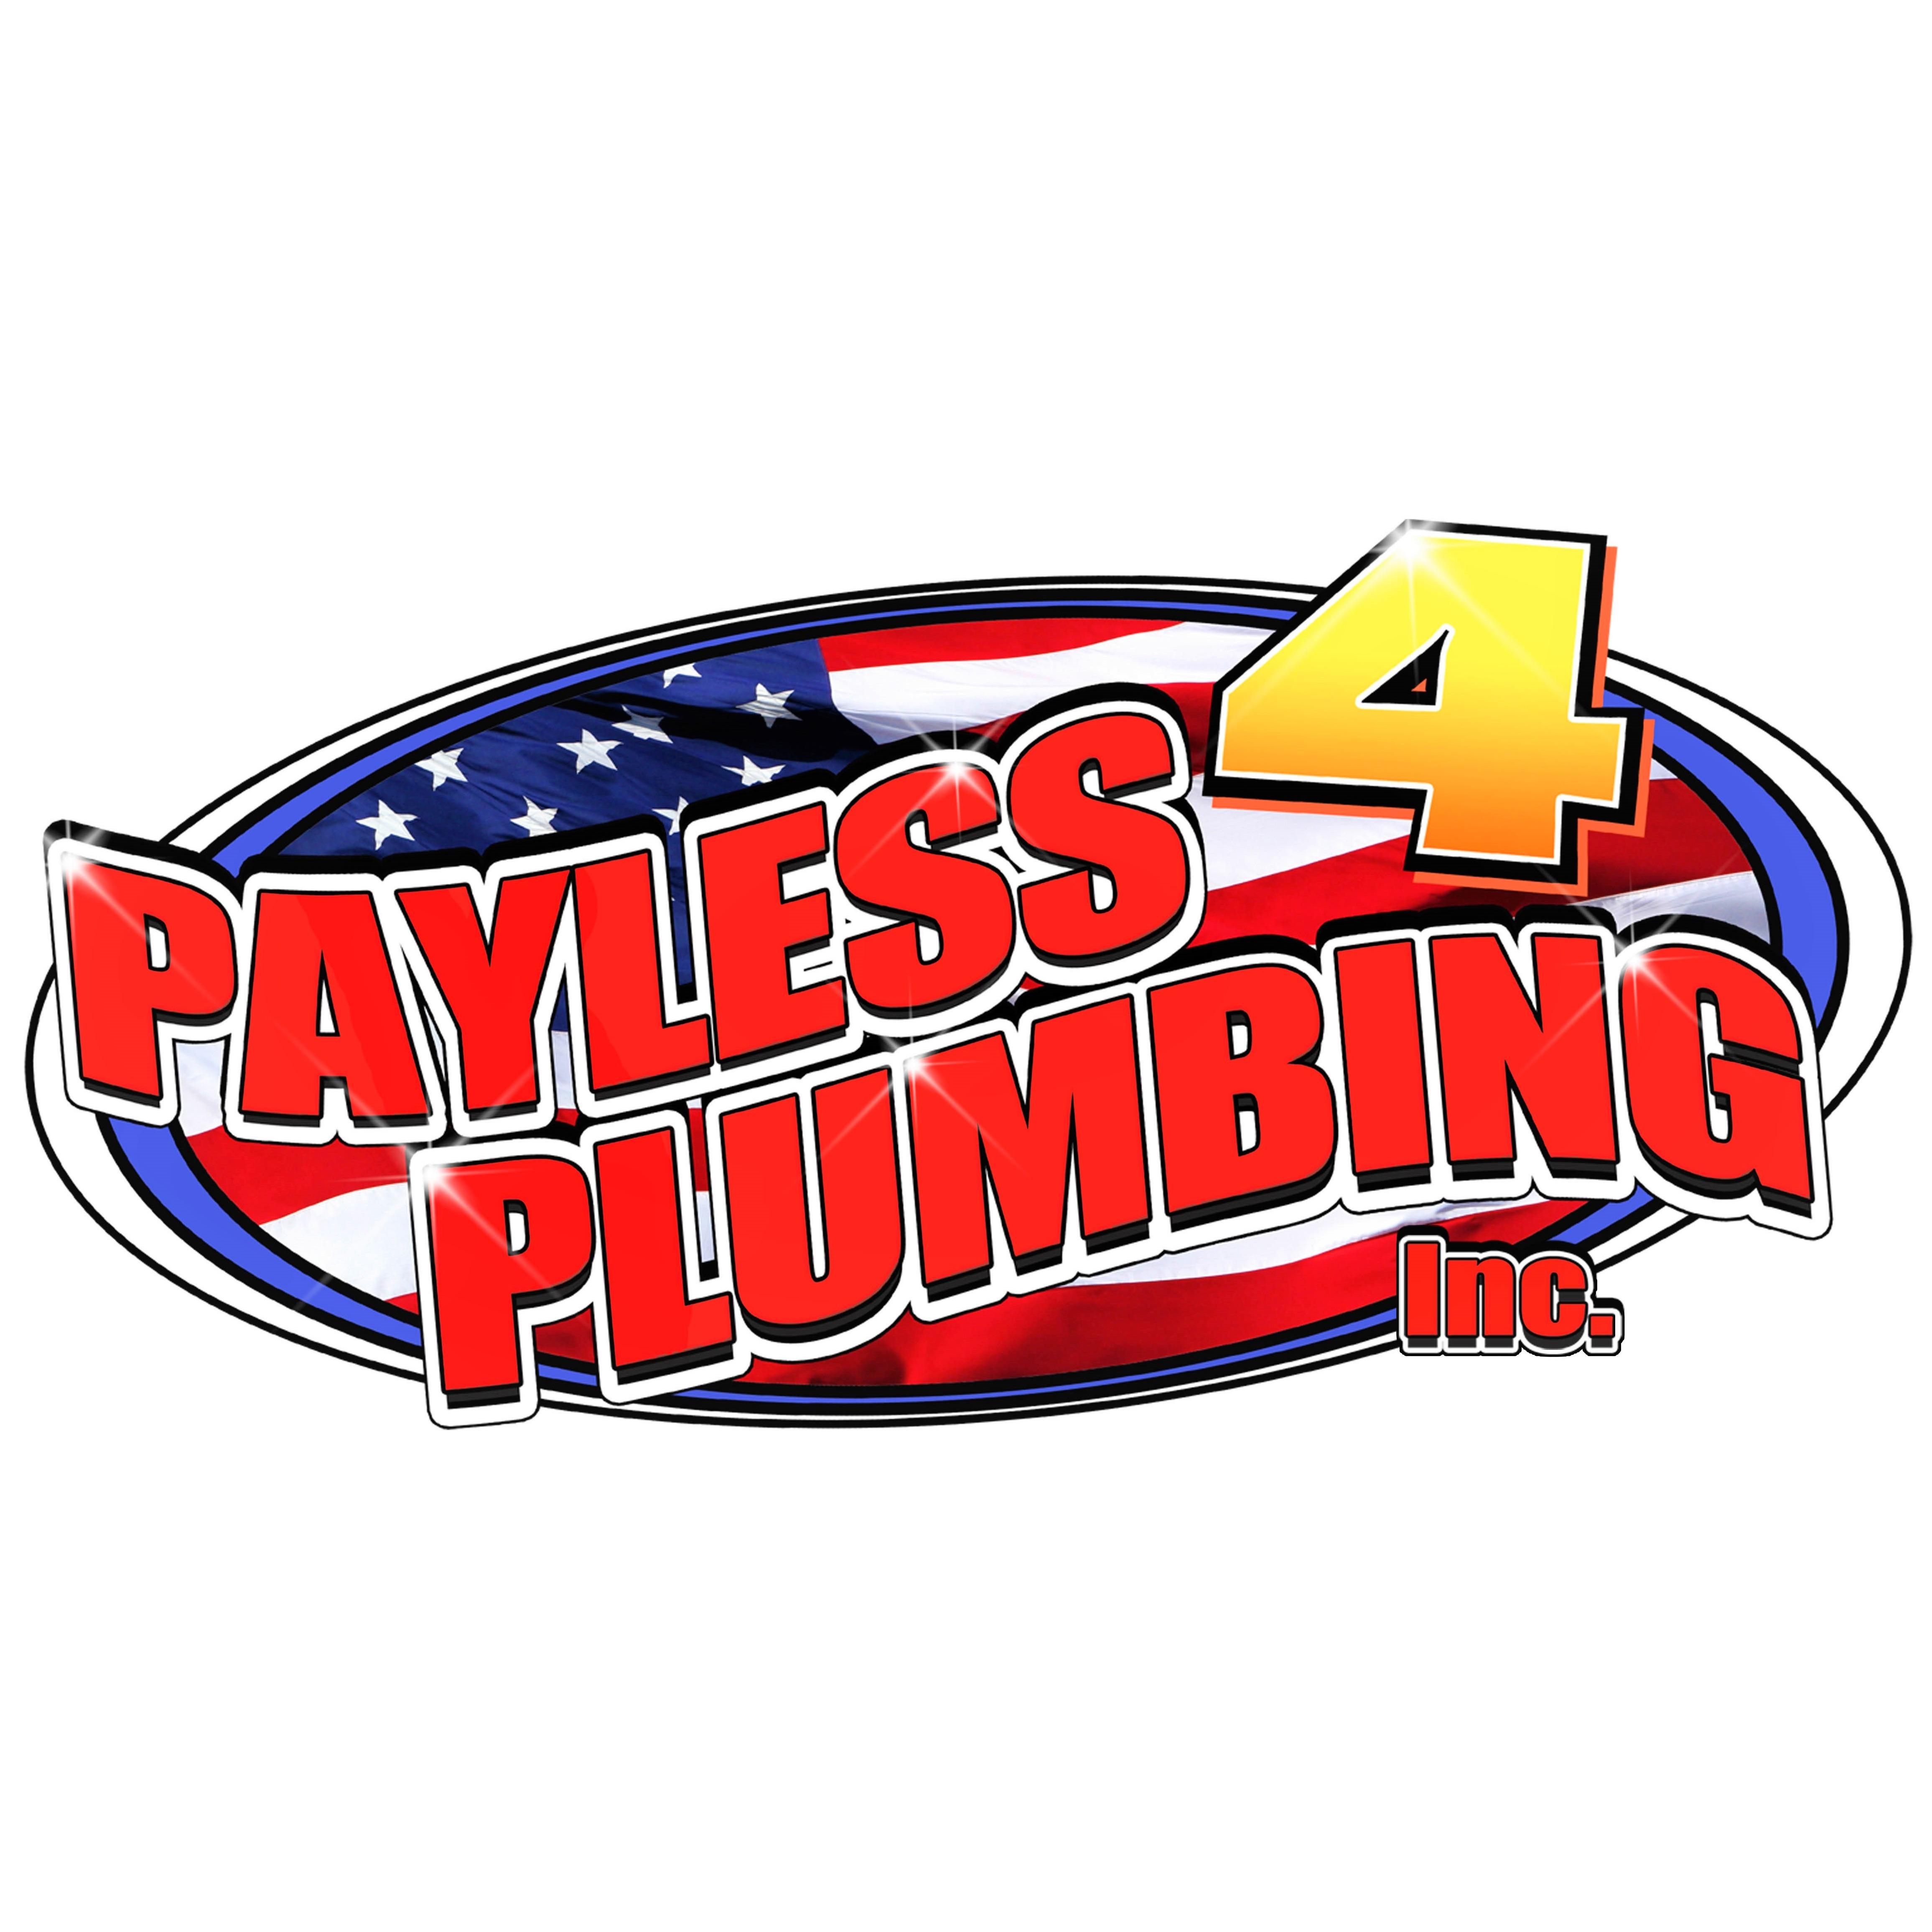 Payless 4 Plumbing - San Bernardino, CA 92411 - (909)639-8839 | ShowMeLocal.com